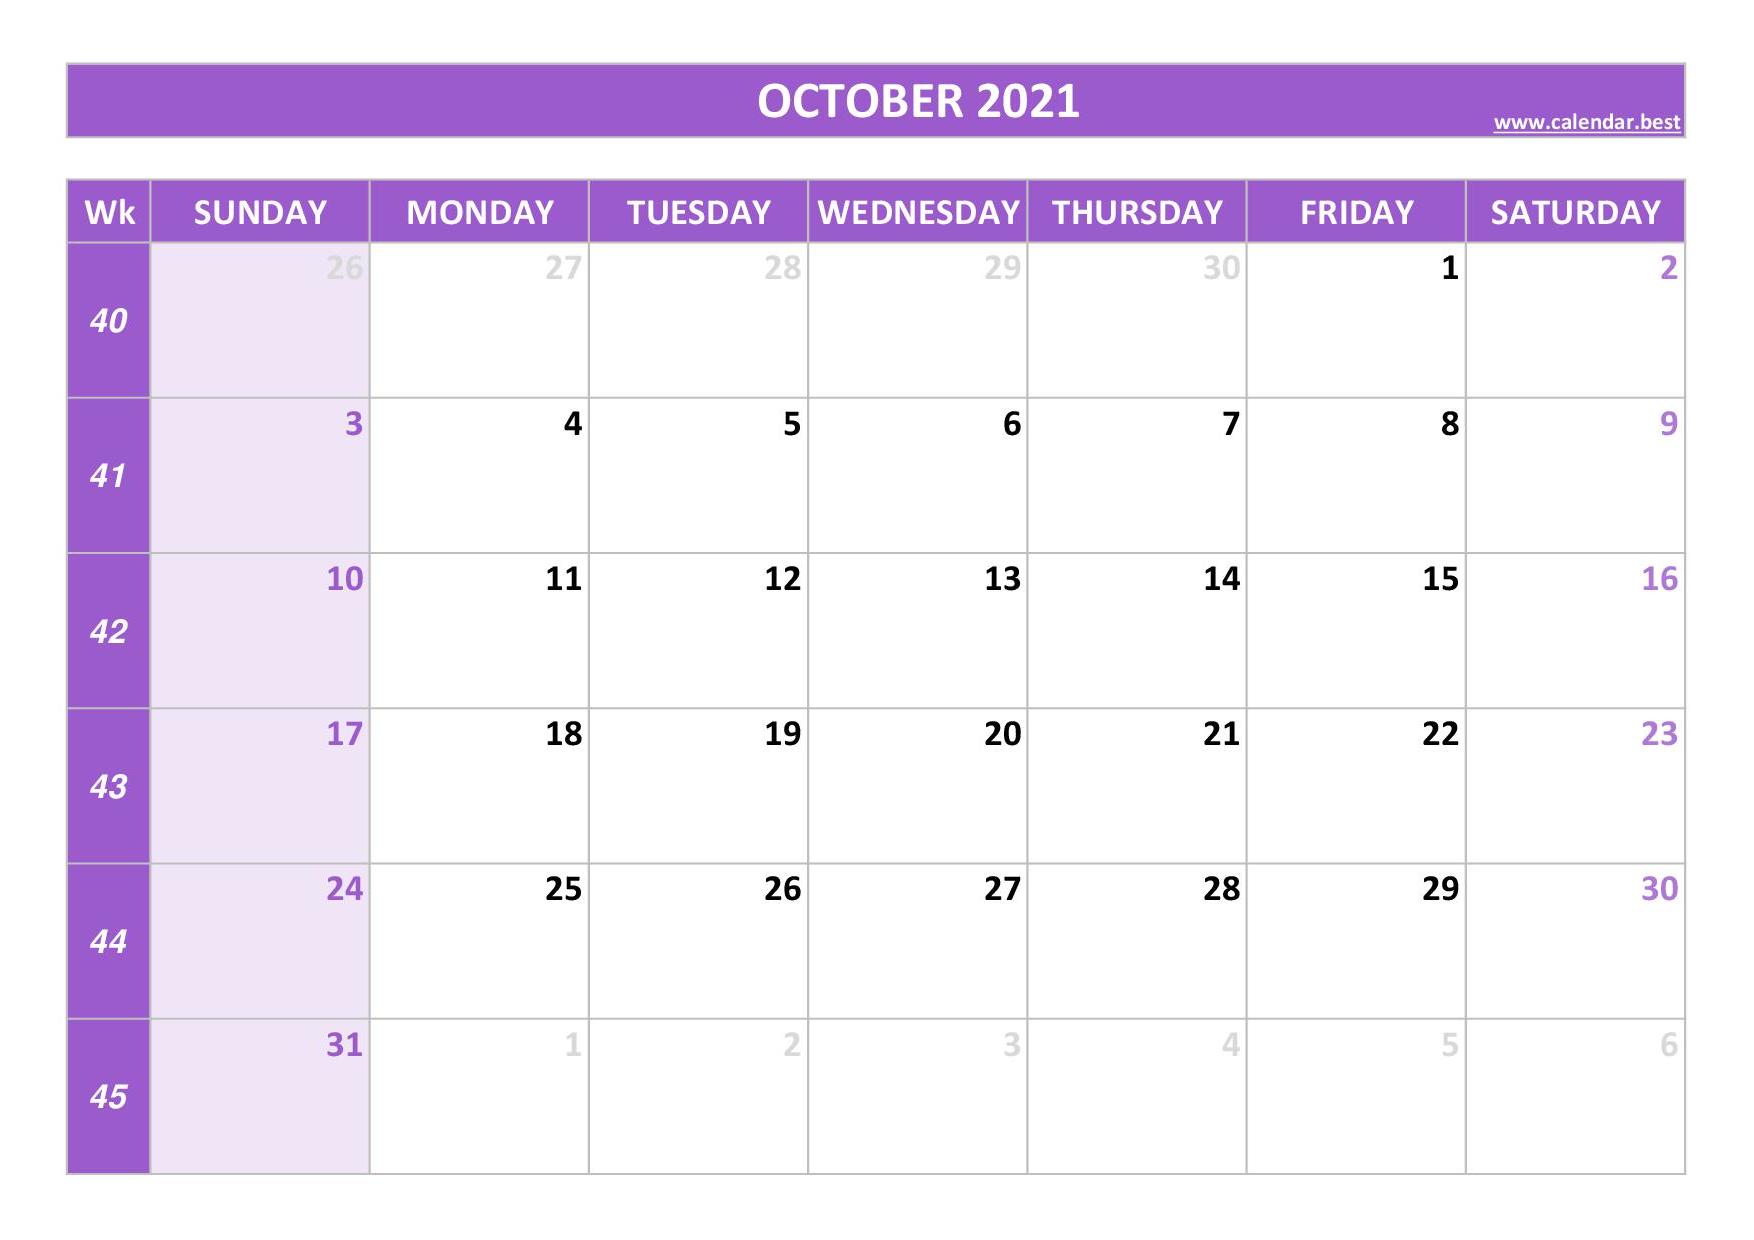 October calendar 2021